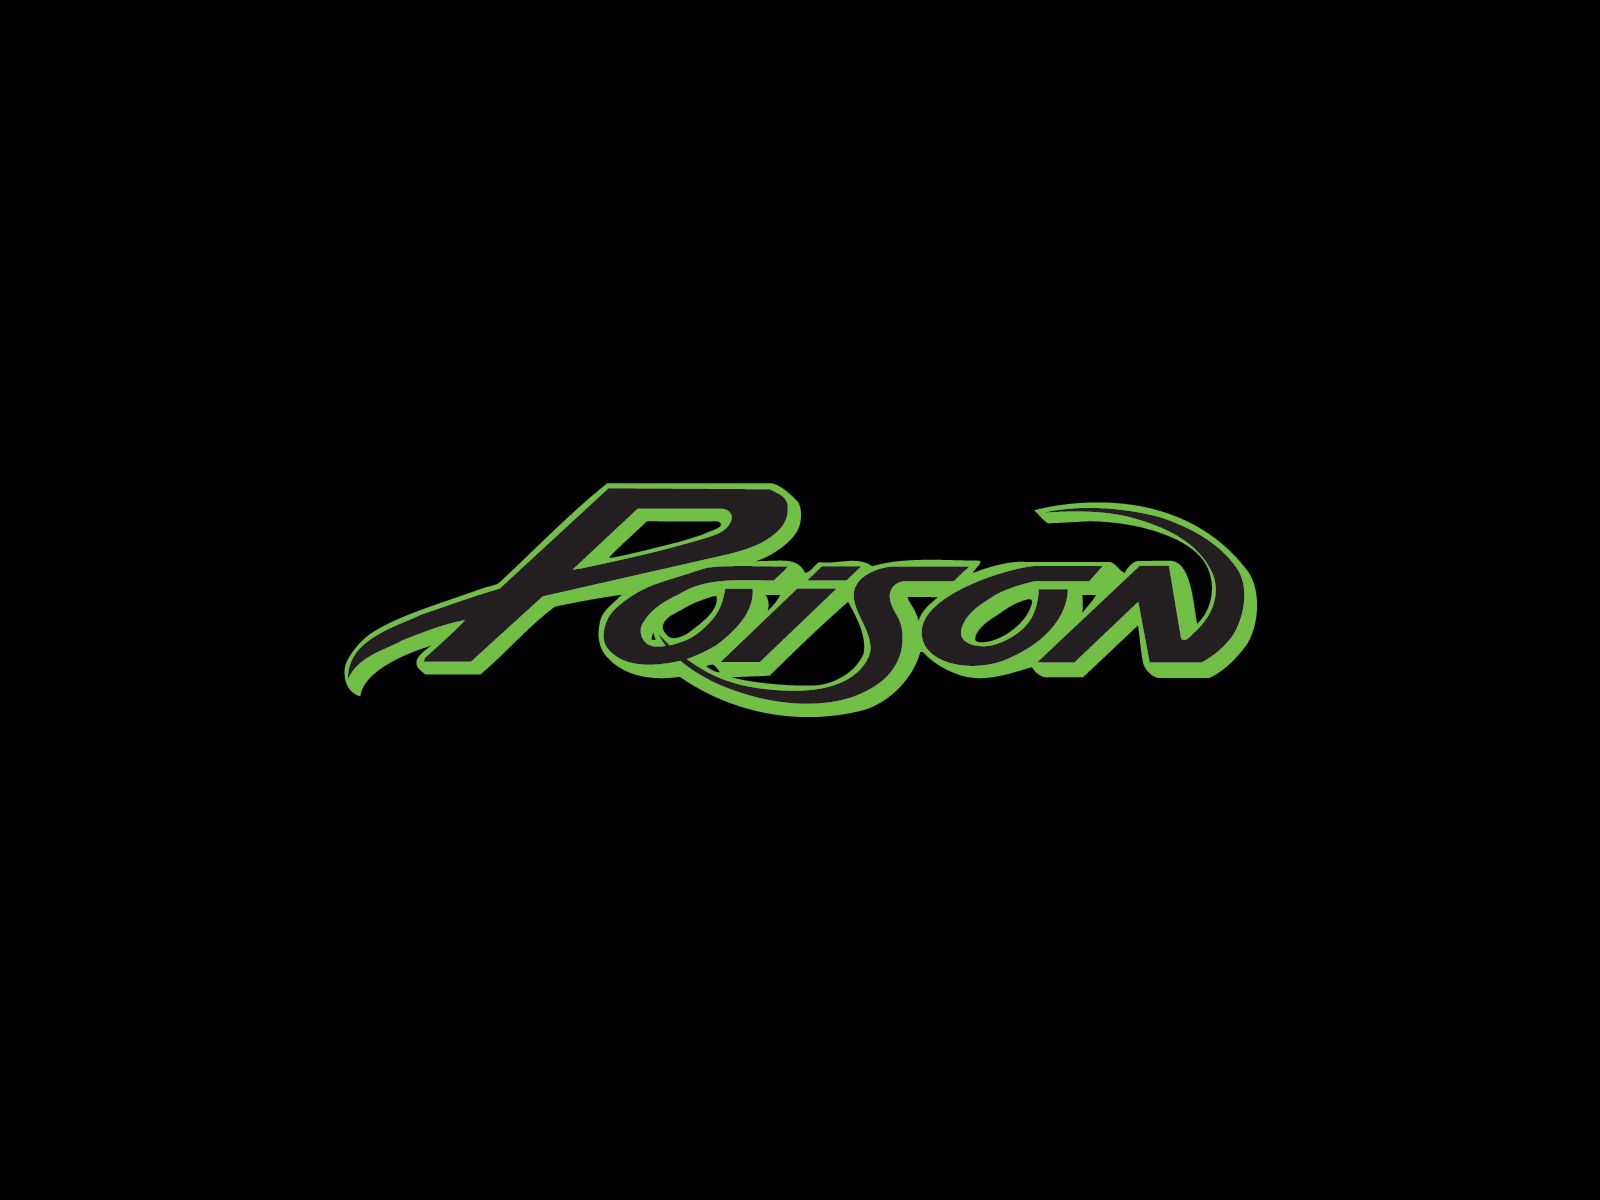 Poison band logo. Band logos, Rock band logos, ? logo